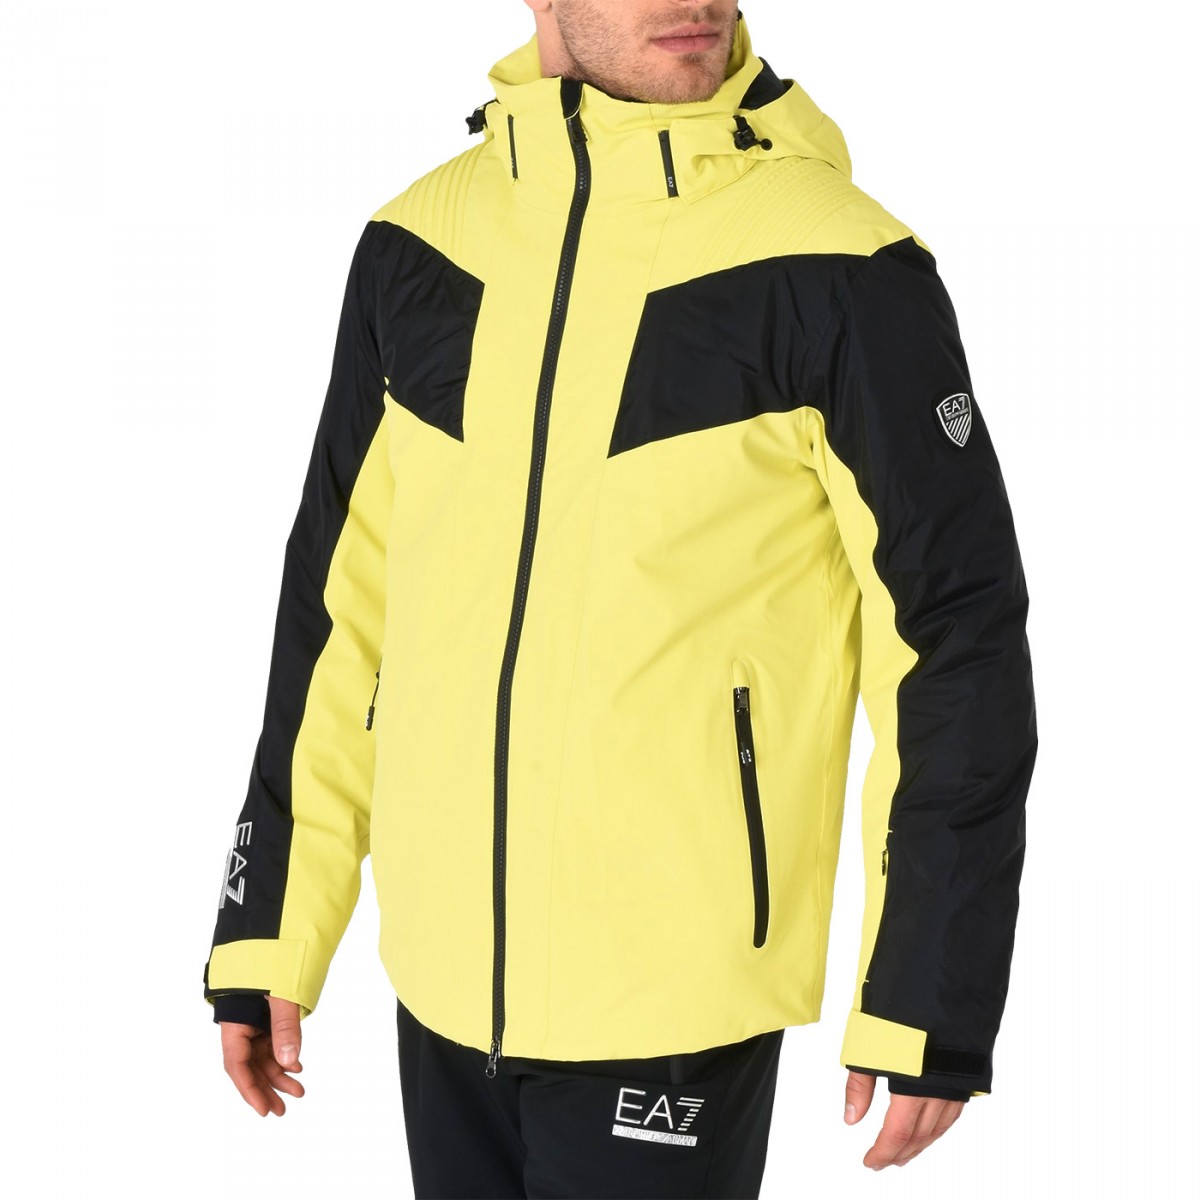 Ski jacket Ea7 6YPG05 Man - Ski clothing | EN